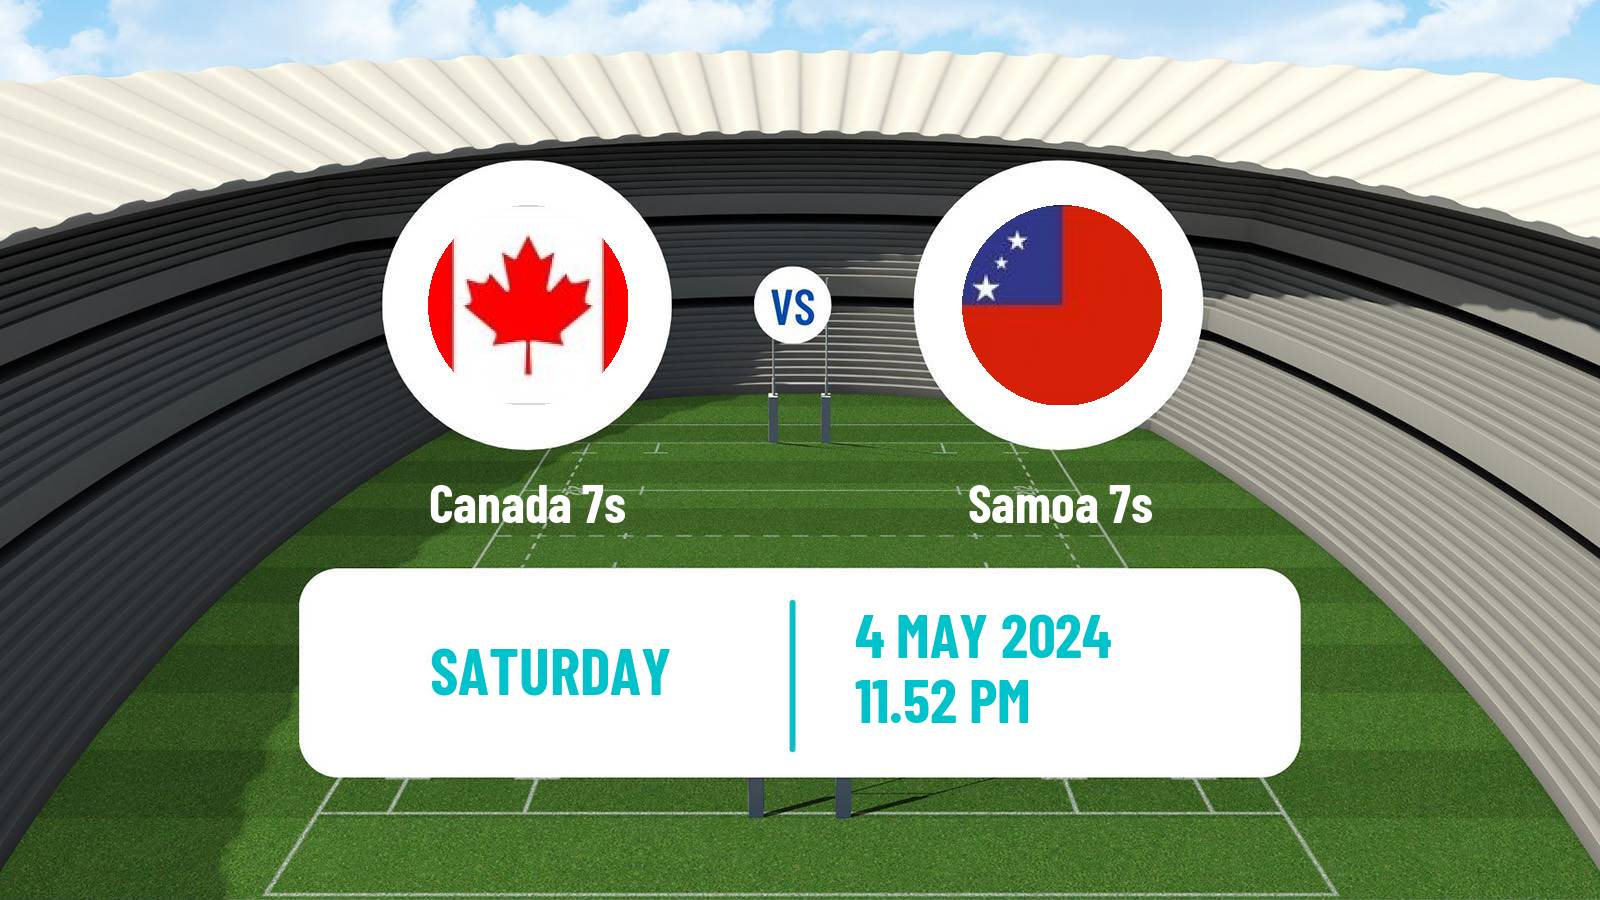 Rugby union Sevens World Series - Singapore Canada 7s - Samoa 7s